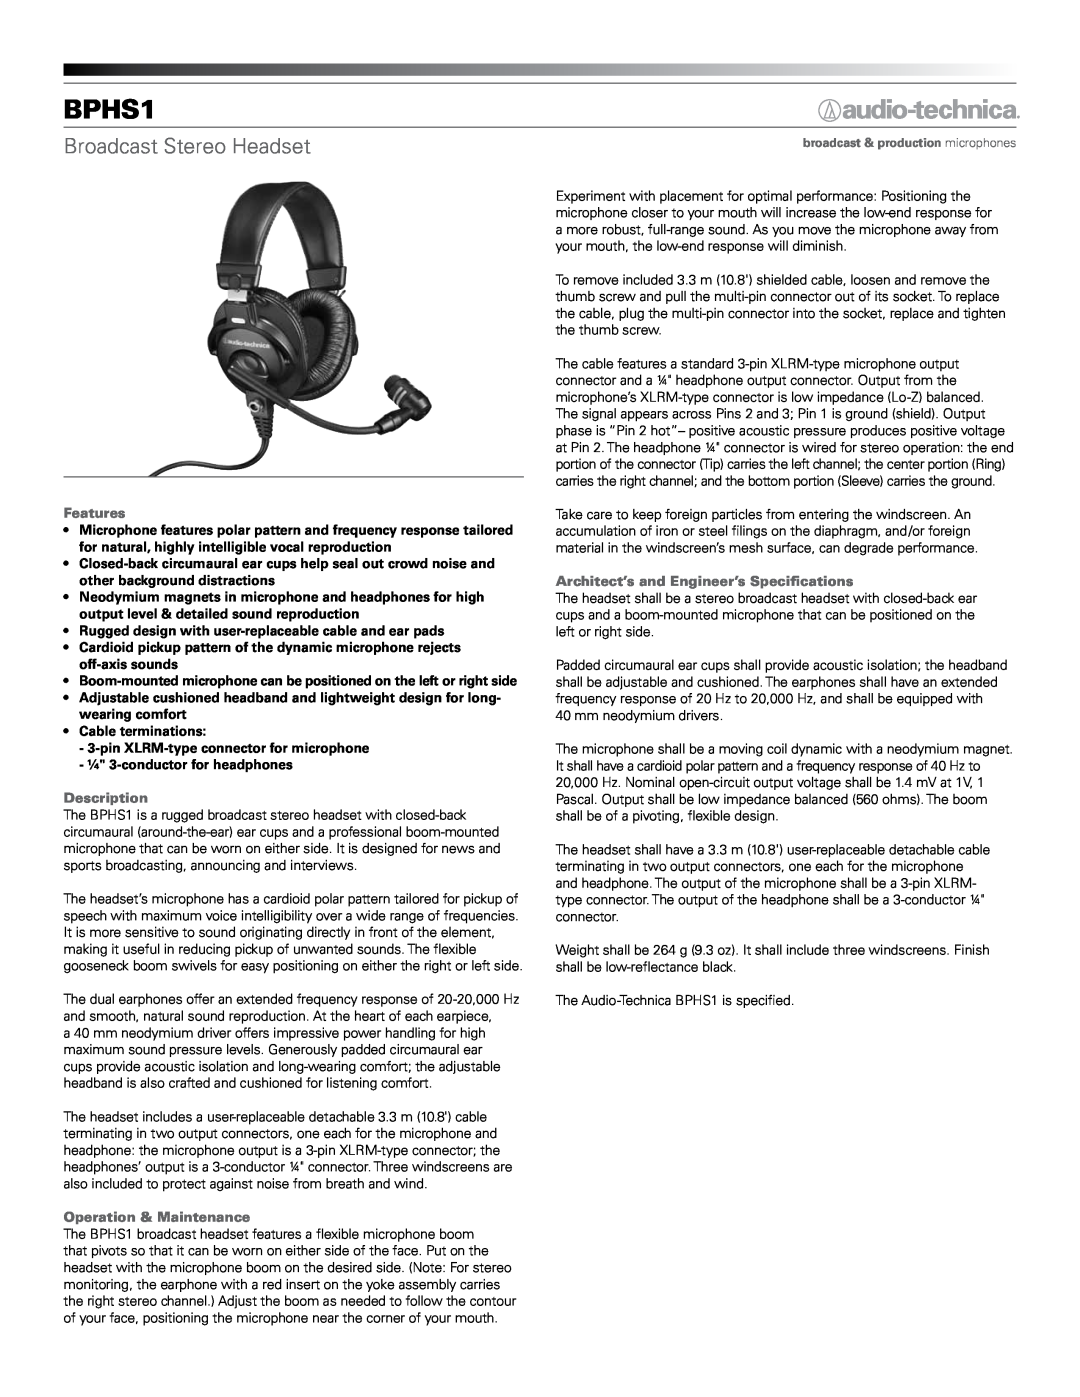 Audio-Technica BPHS1 manual Broadcast Stereo Headset, Features, Description, Operation & Maintenance 